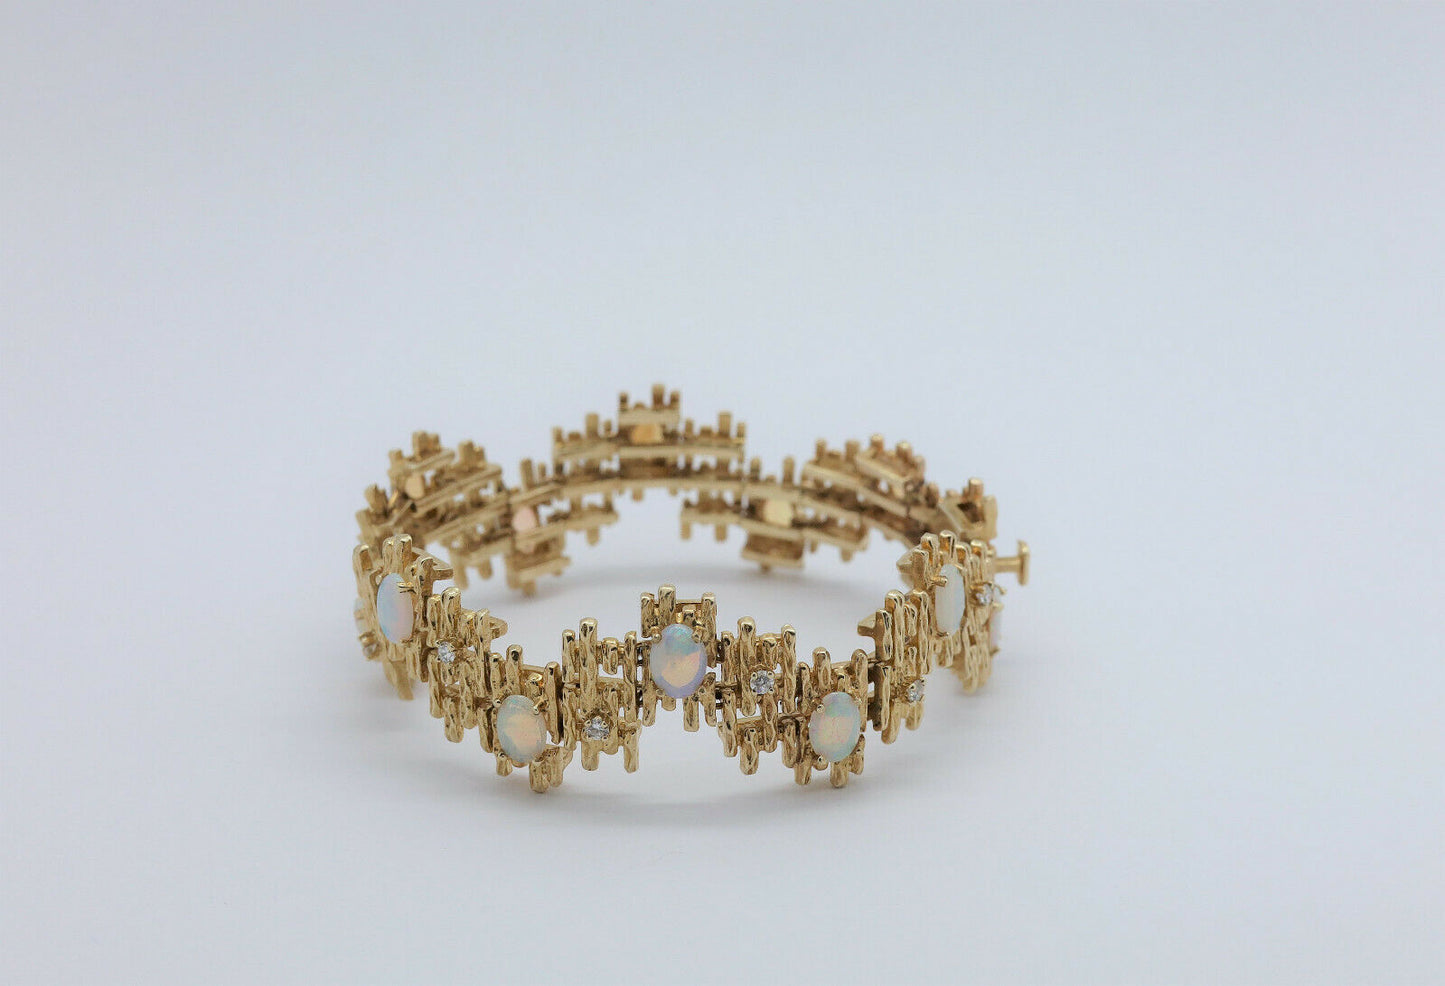 14k Yellow Gold Opal & Diamonds Bracelet, 7 inches - 38.1g